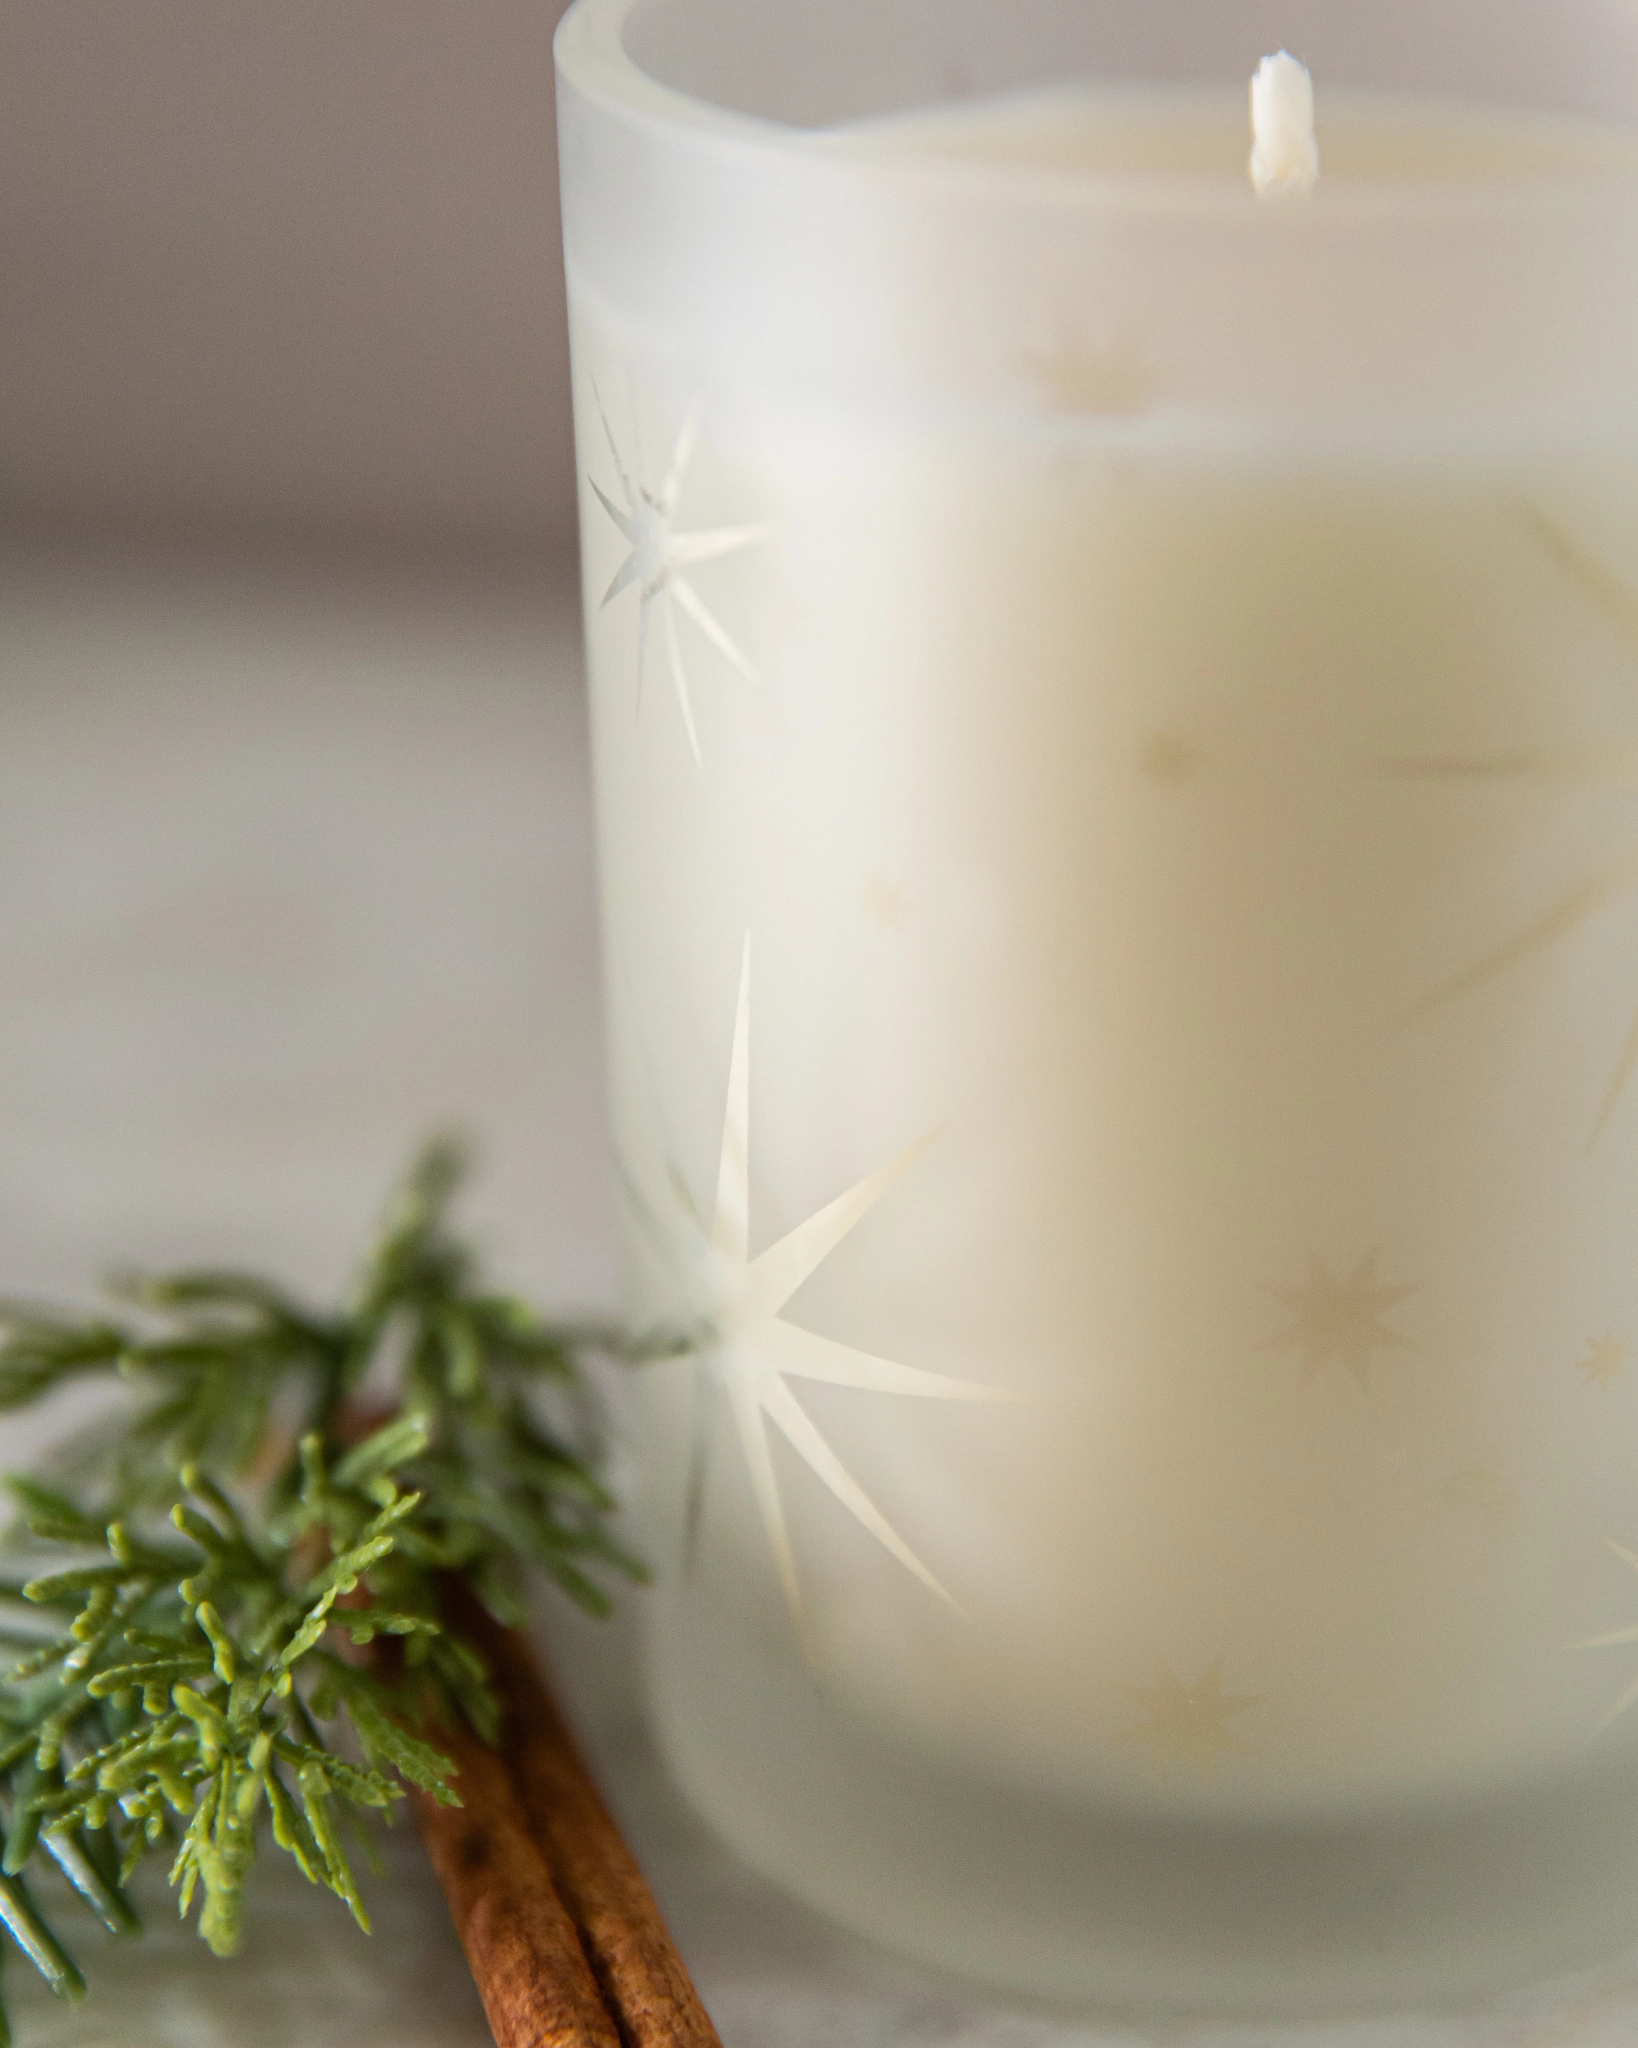 ILLUME® Gifted Christmas Glass Candle